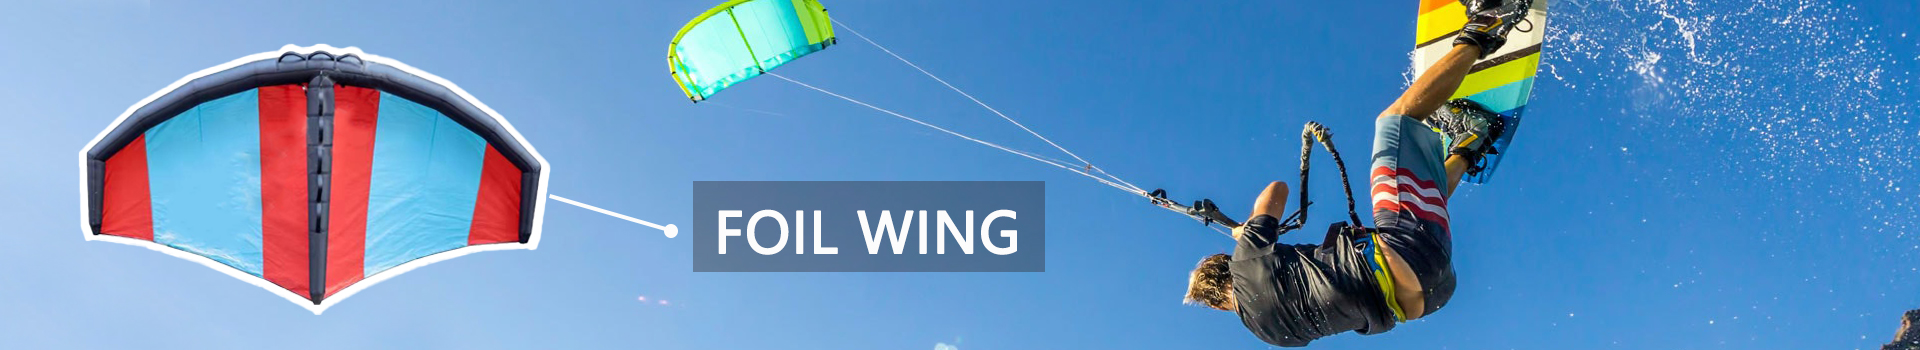 Aluminum boom for windsurfing